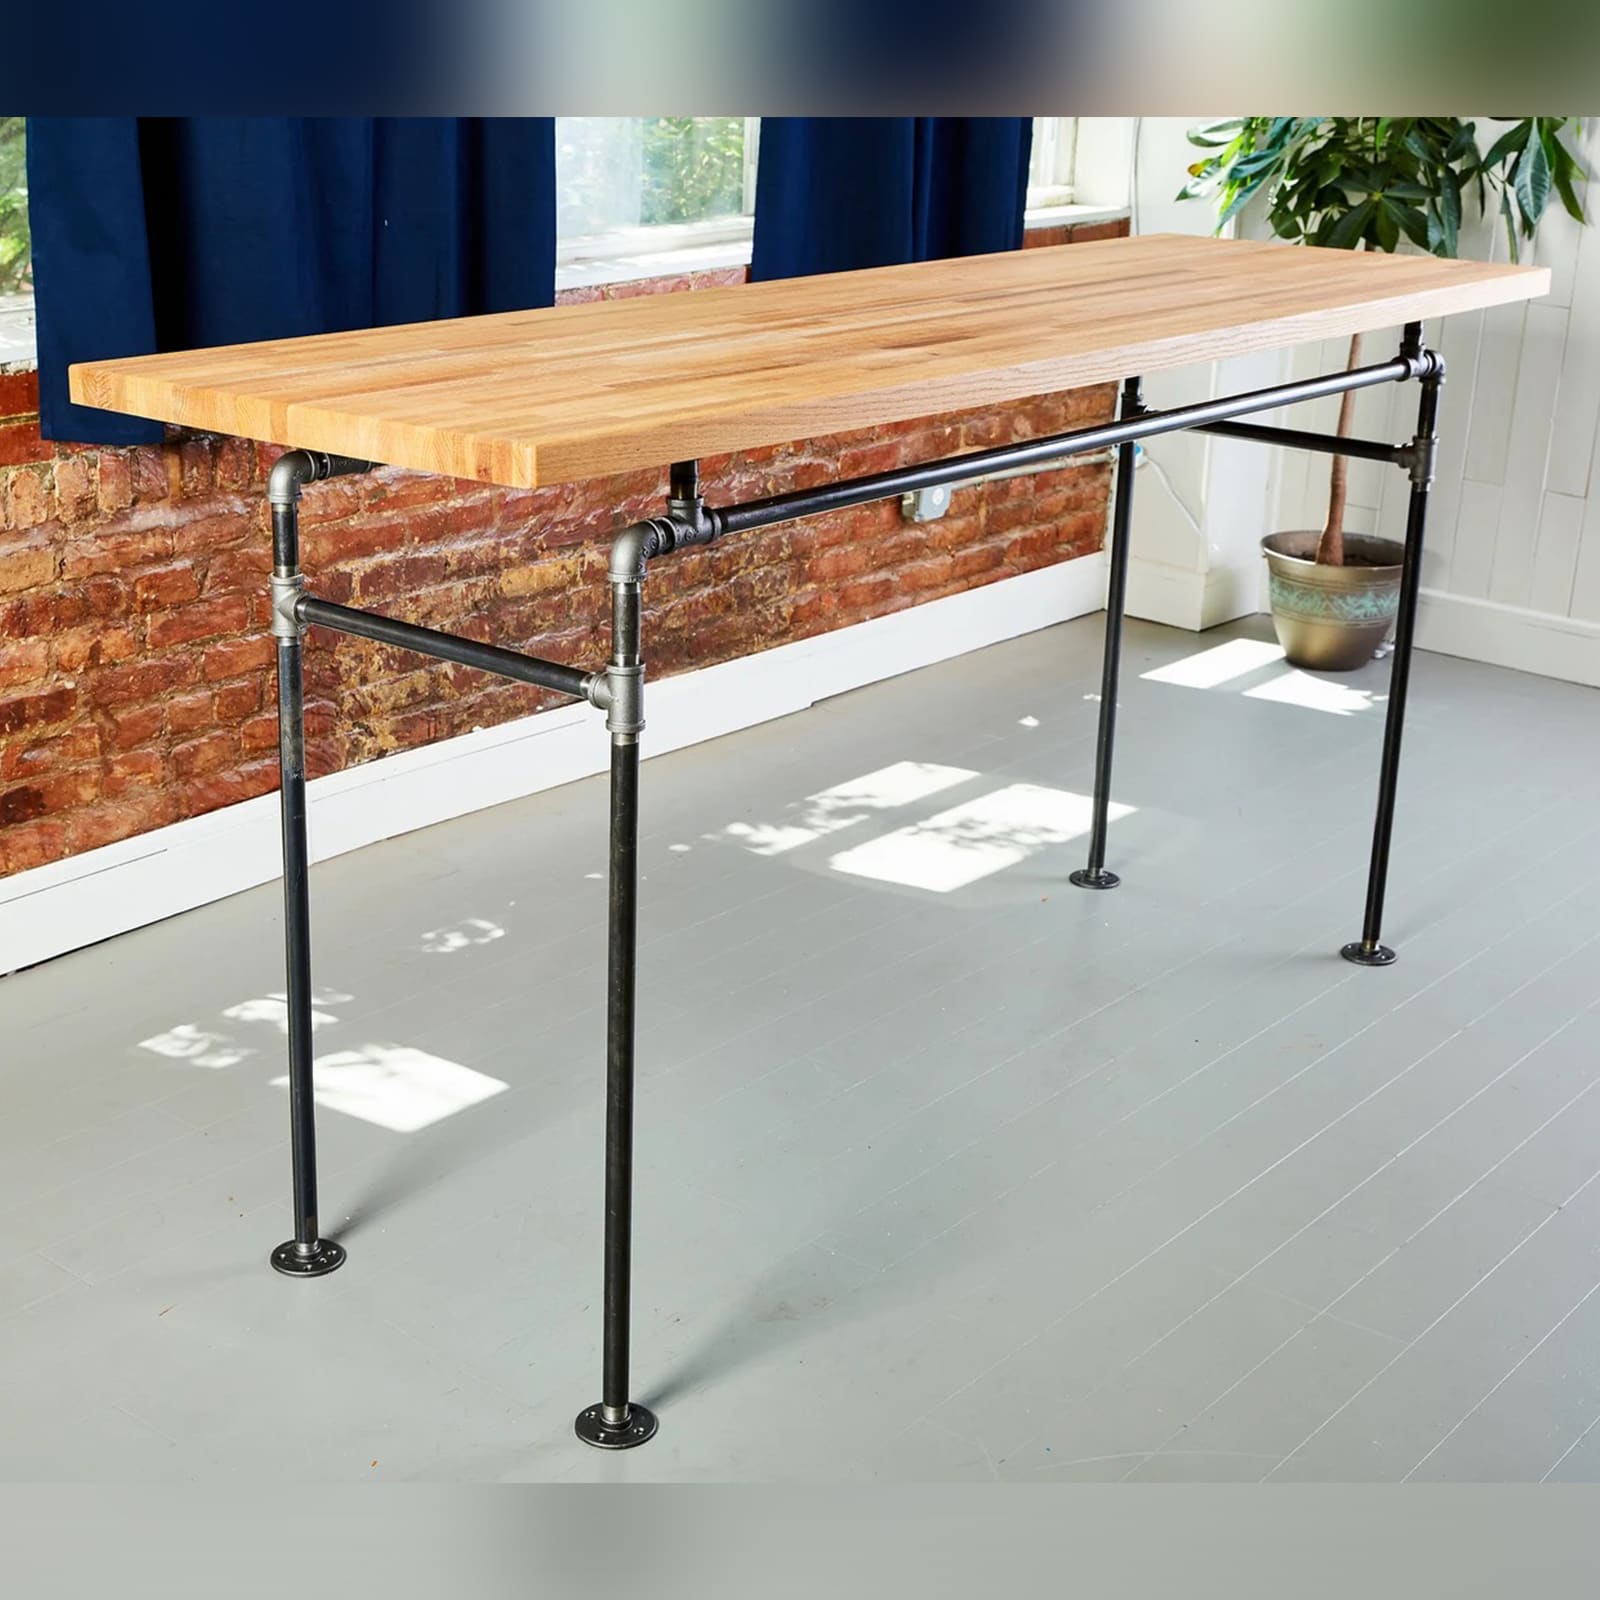 soil & oak standalone desk with black pipe legs and an oak butcher block table top